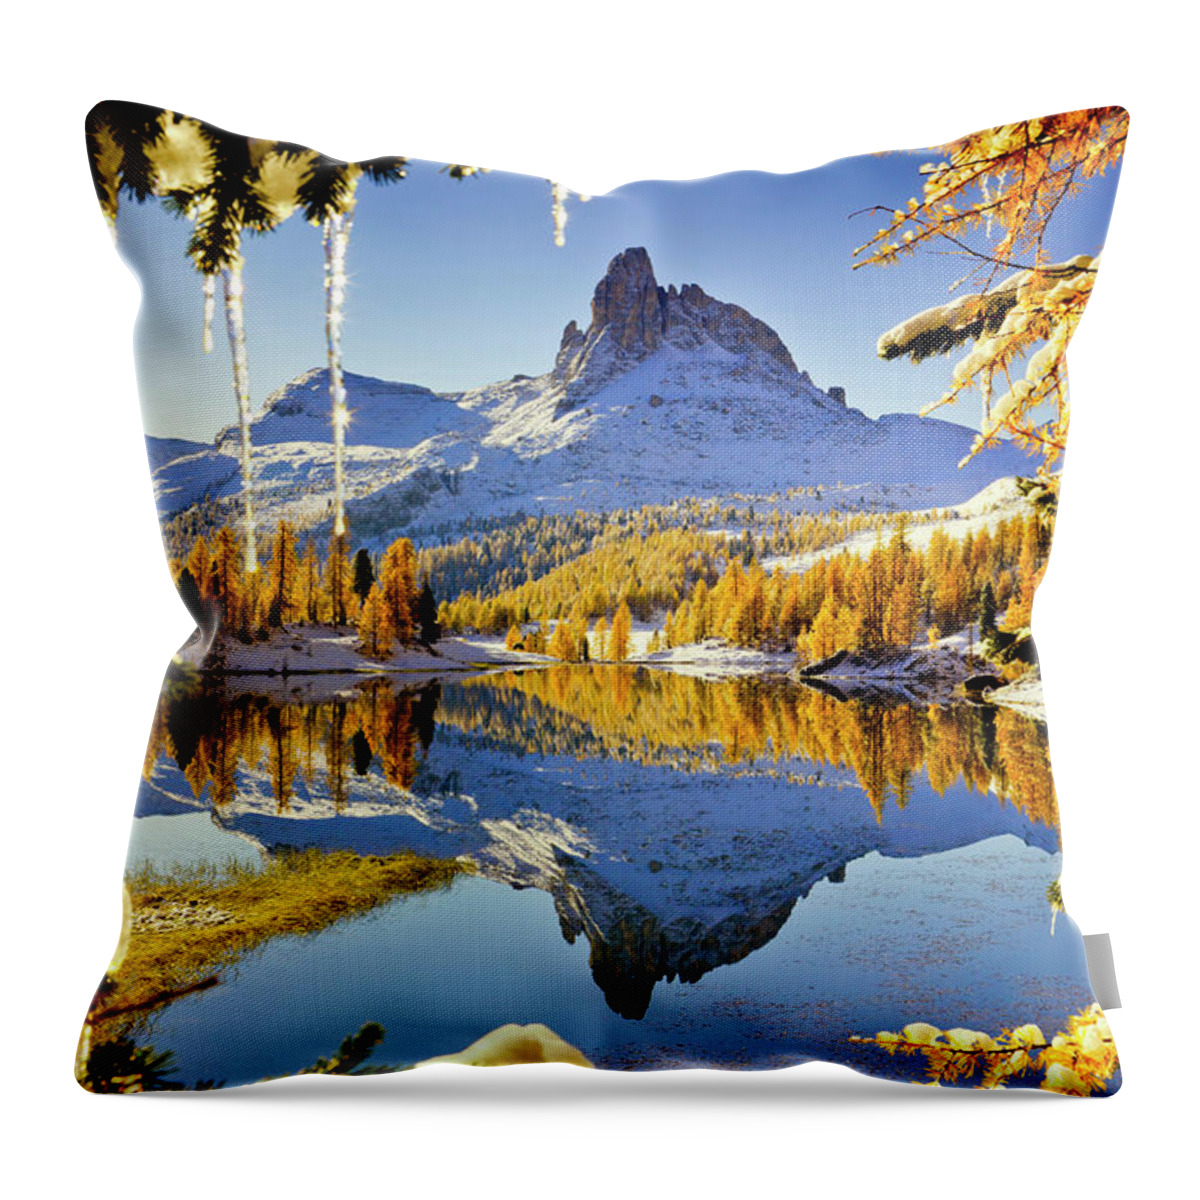 Estock Throw Pillow featuring the digital art Veneto, Alps, Federa Lake, Italy by Olimpio Fantuz